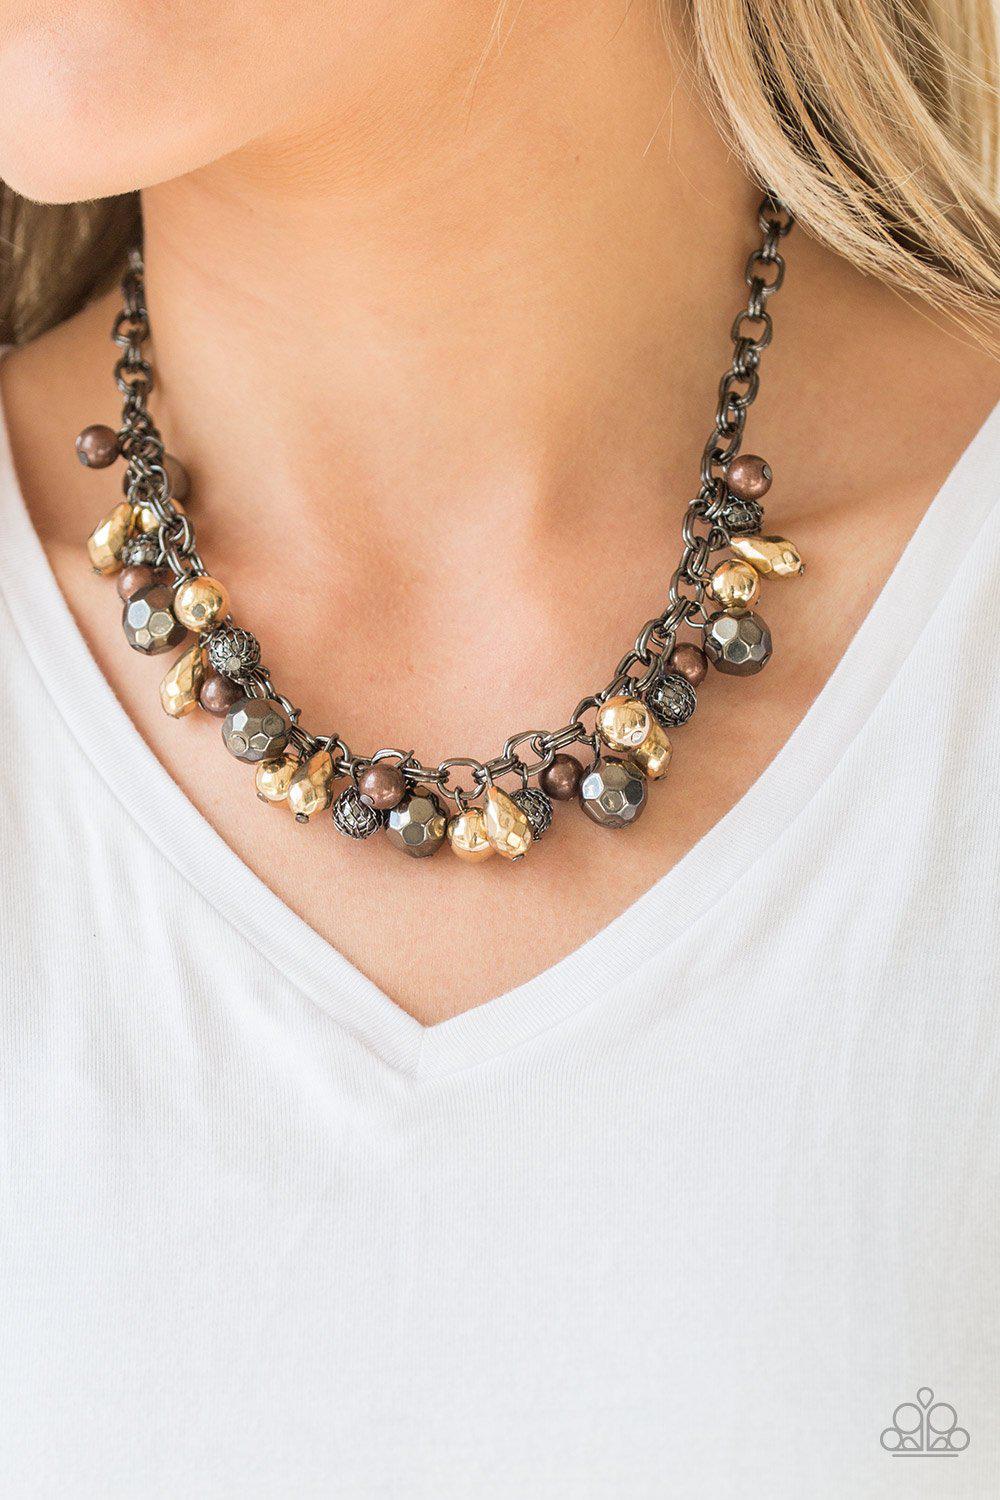 Prismatically Polished Black Necklace - Jewelry by Bretta